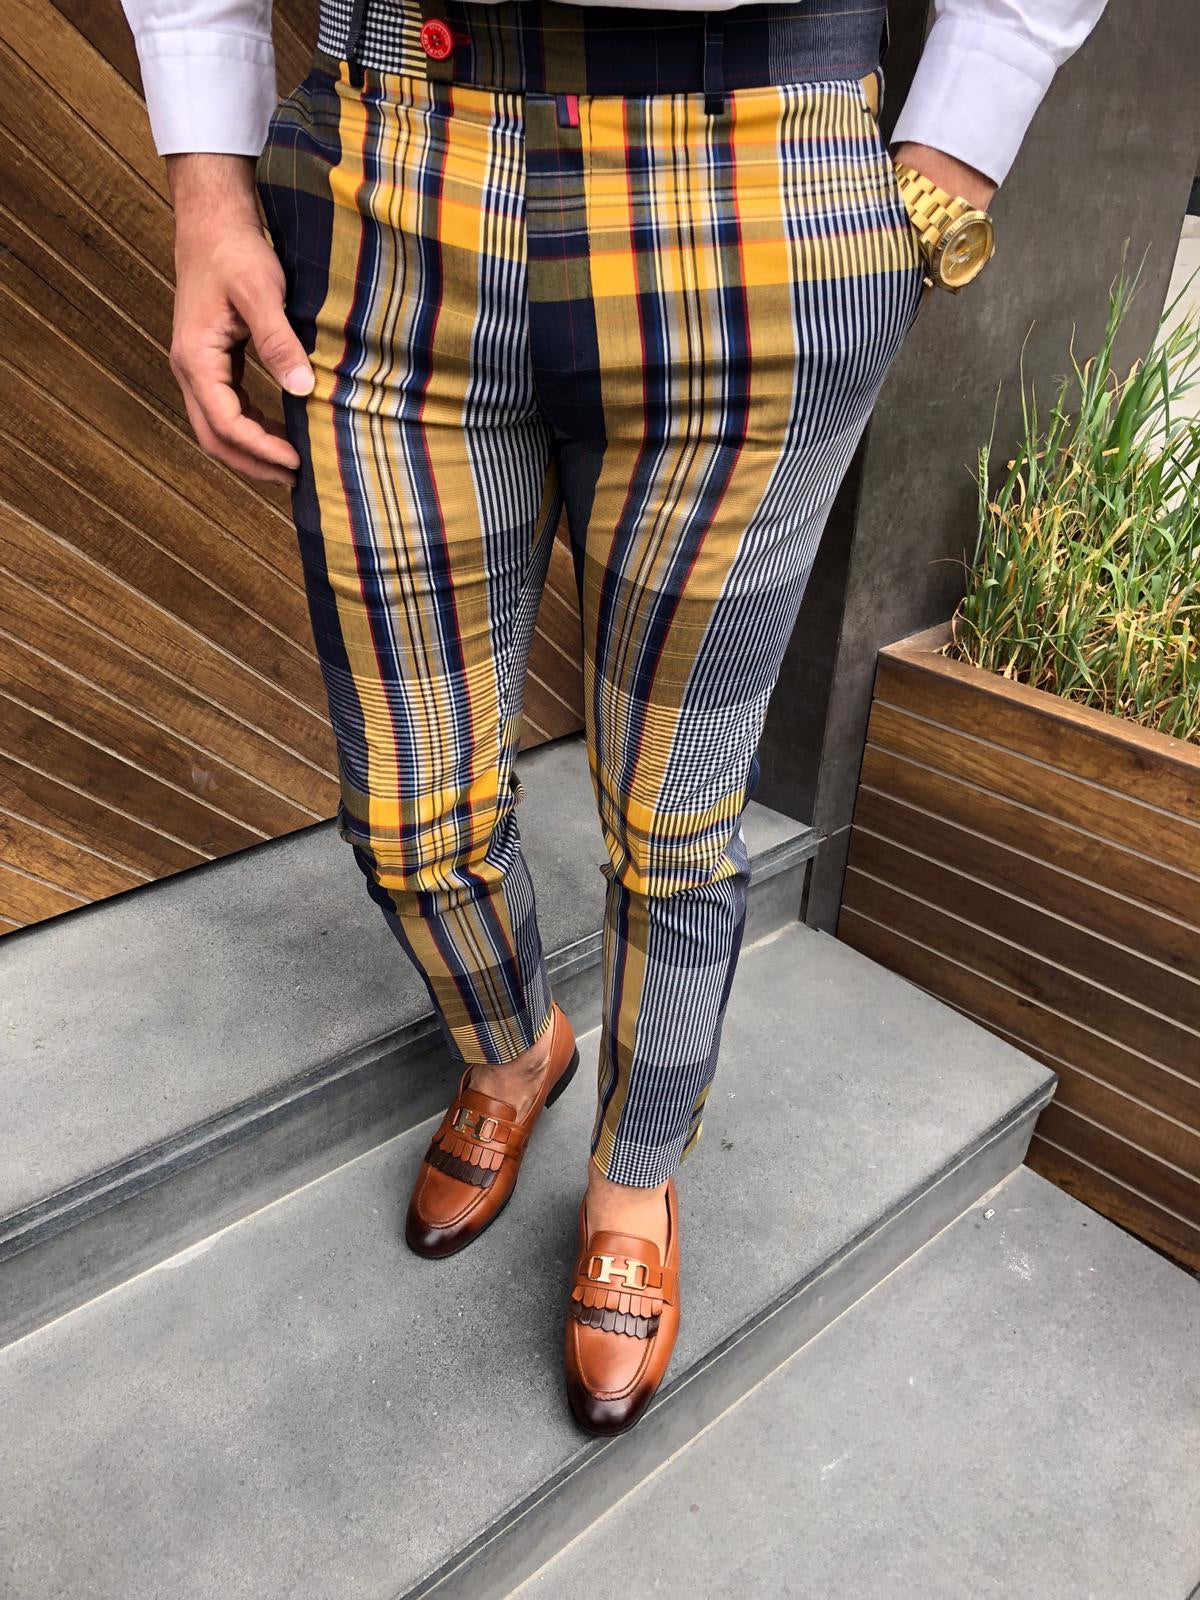 yellow checkered pants